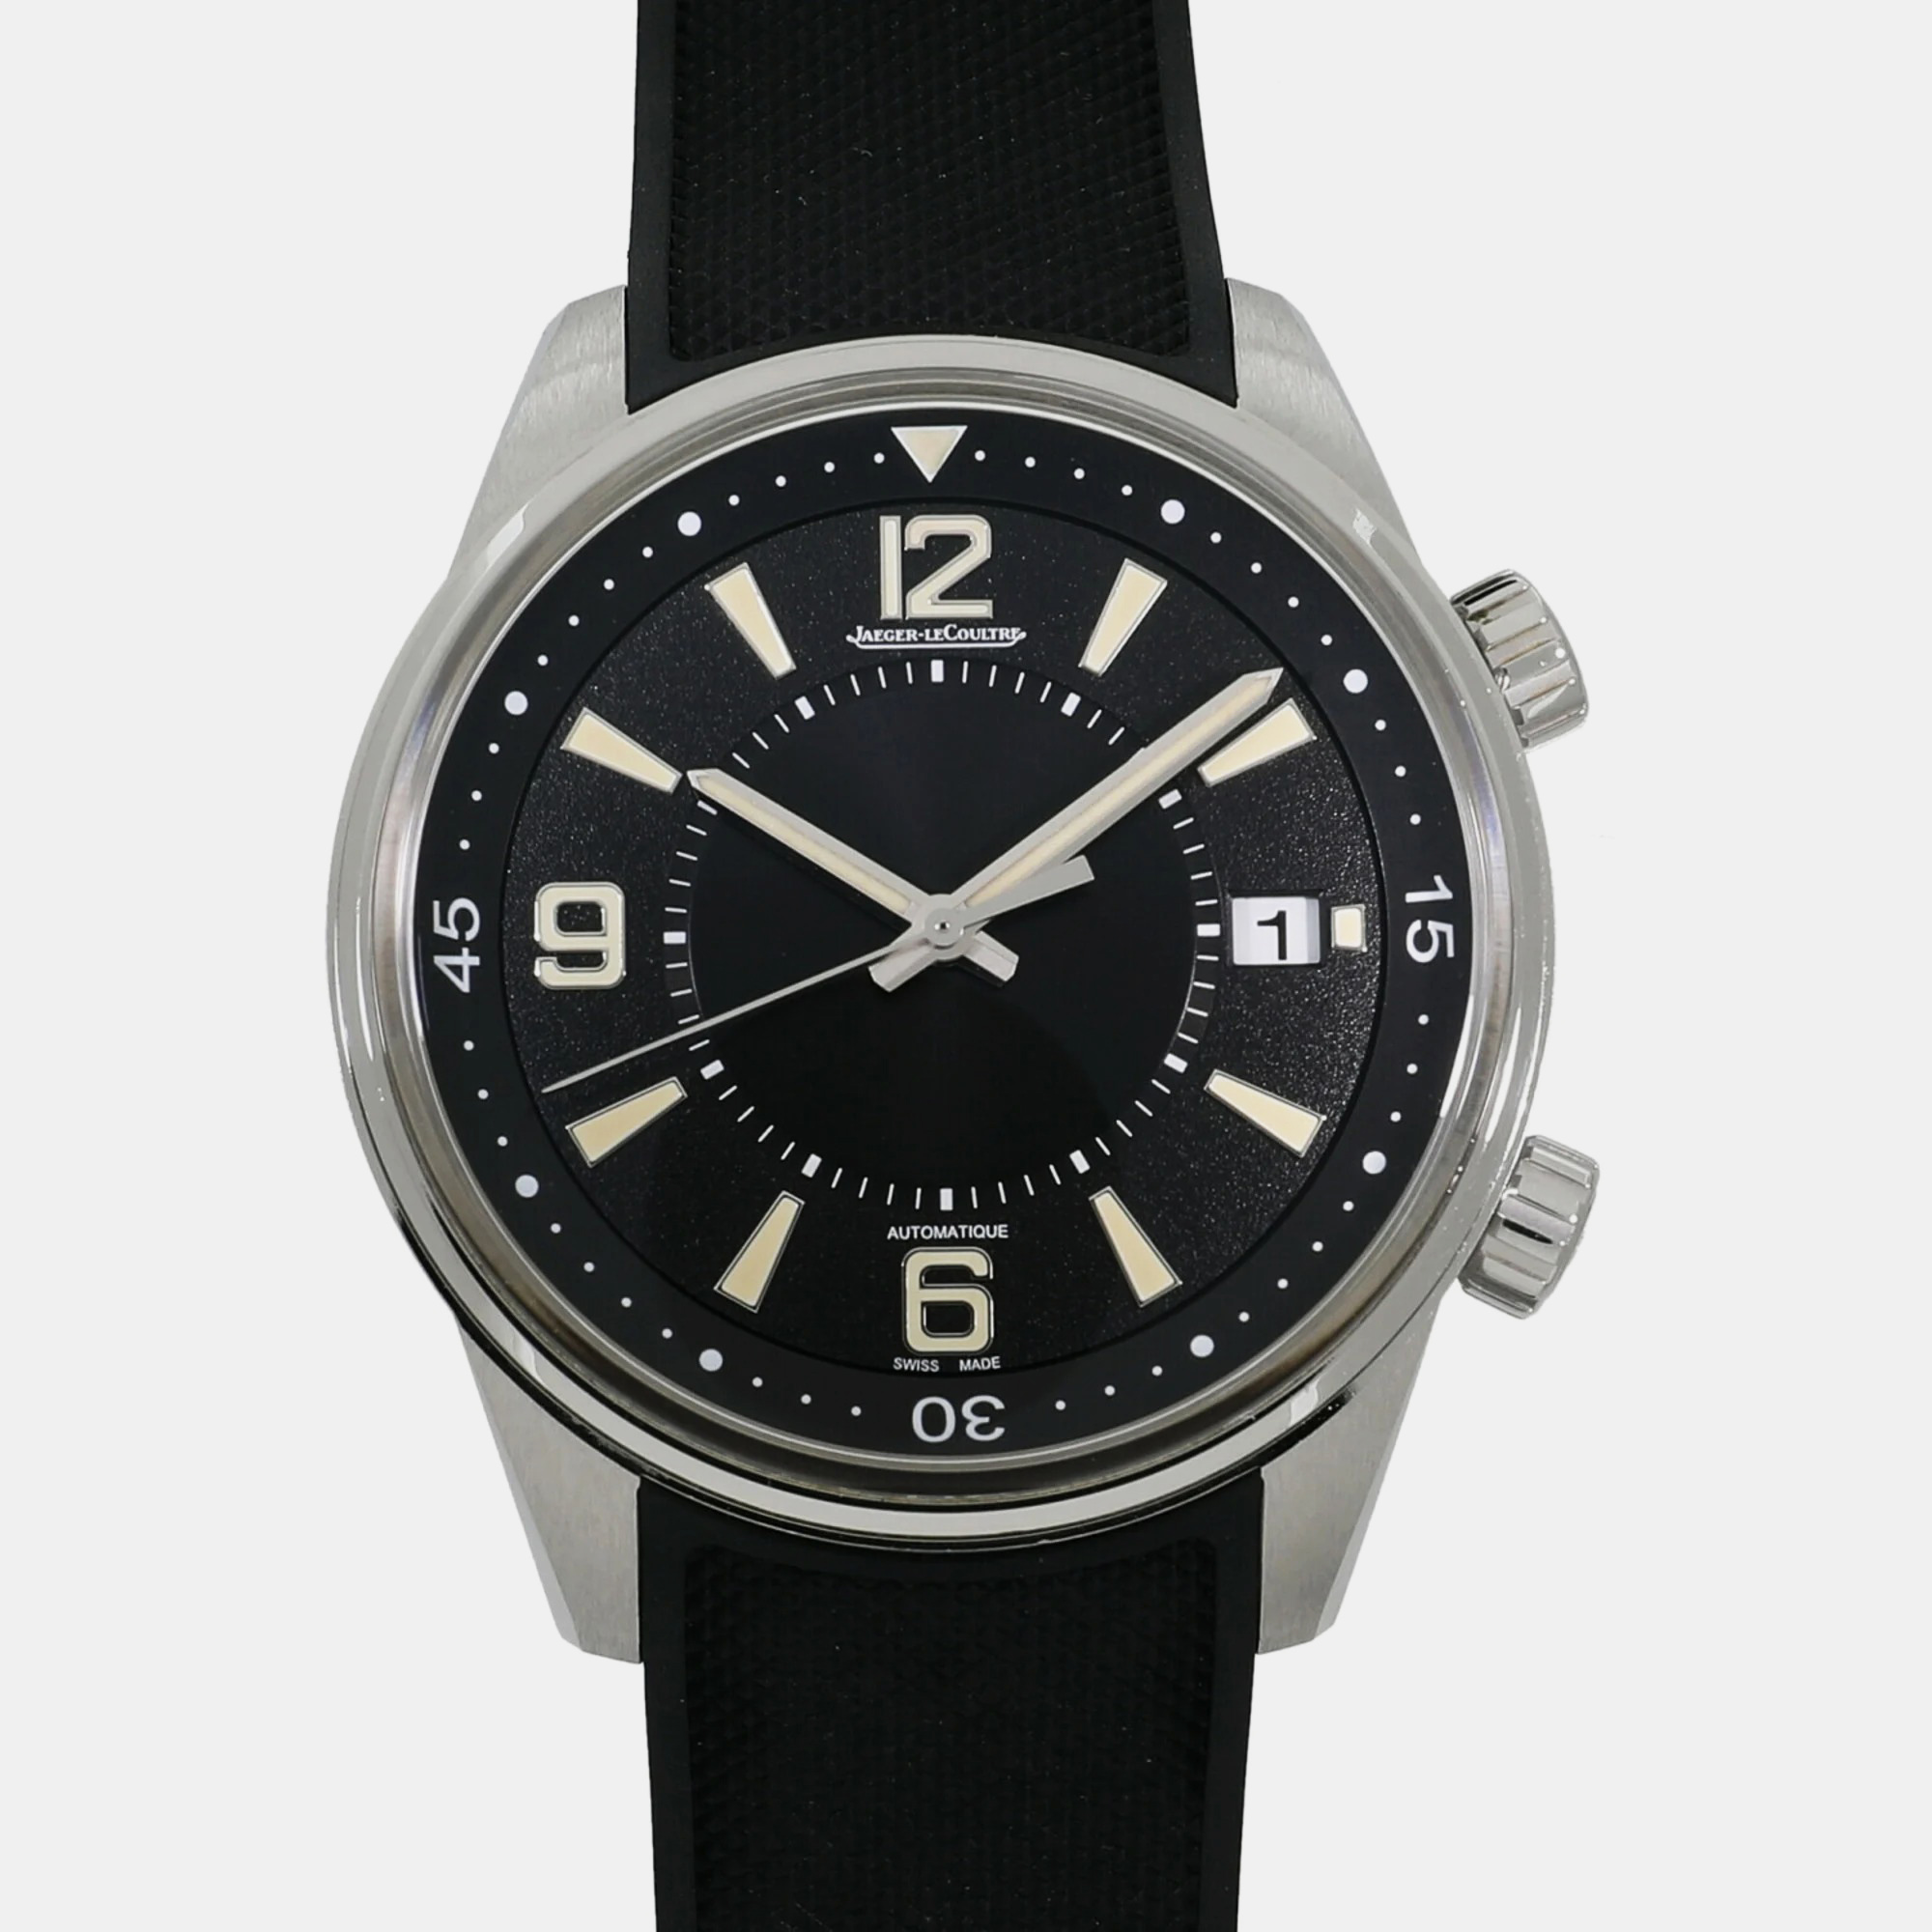 Jaeger lecoultre black stainless steel q9068670 automatic men's wristwatch 42 mm